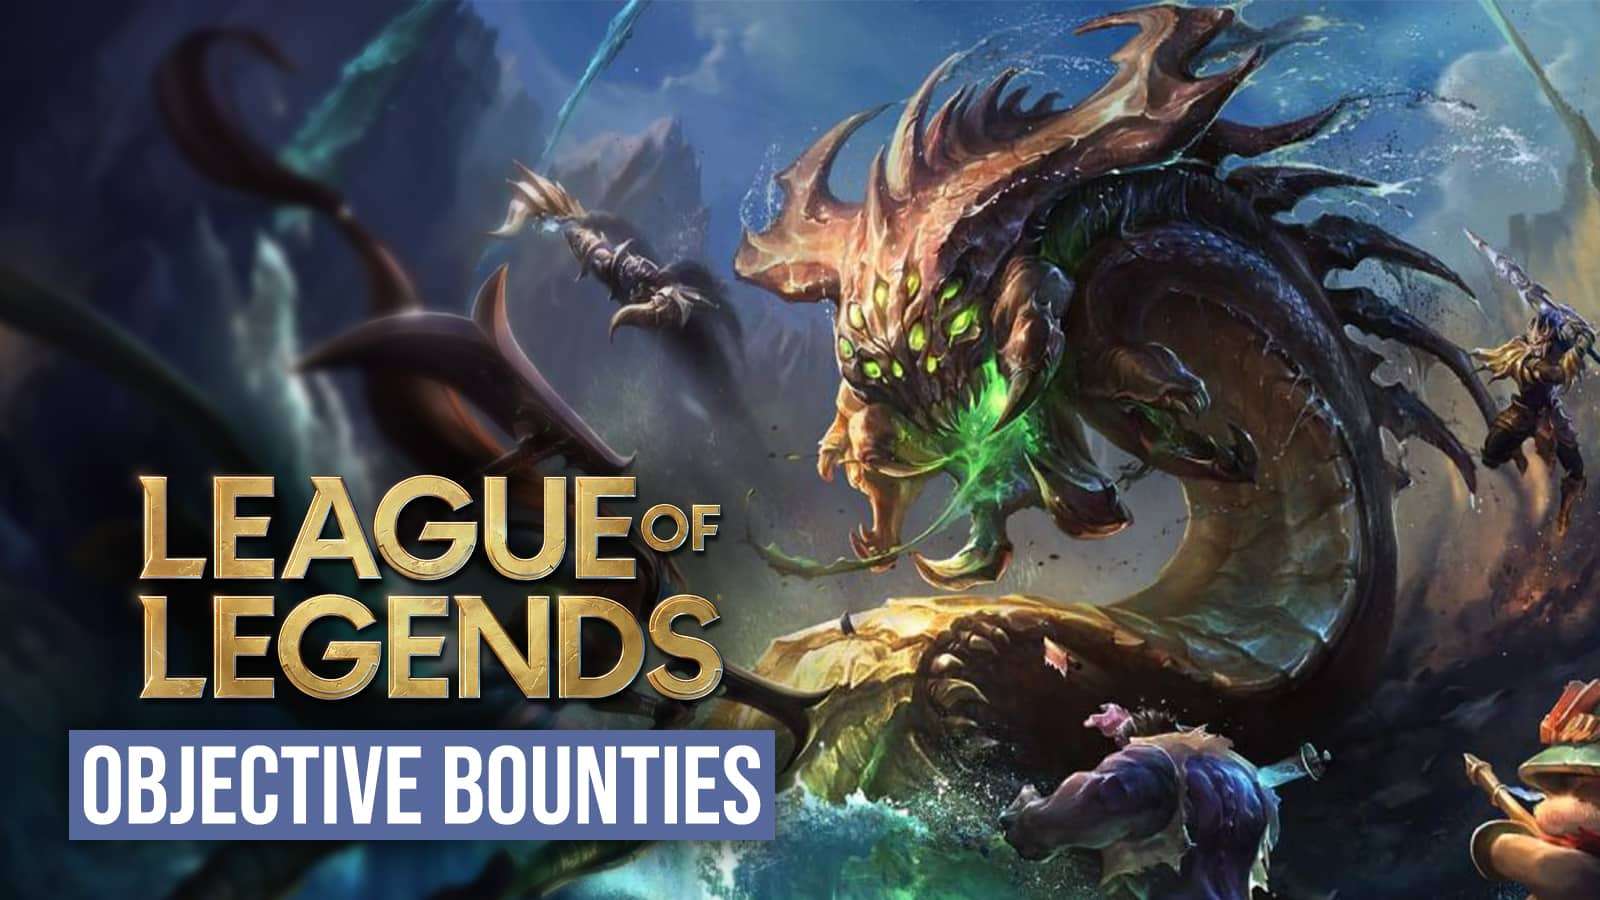 Baron nashor in League of Legends objective bounties season 12 guide